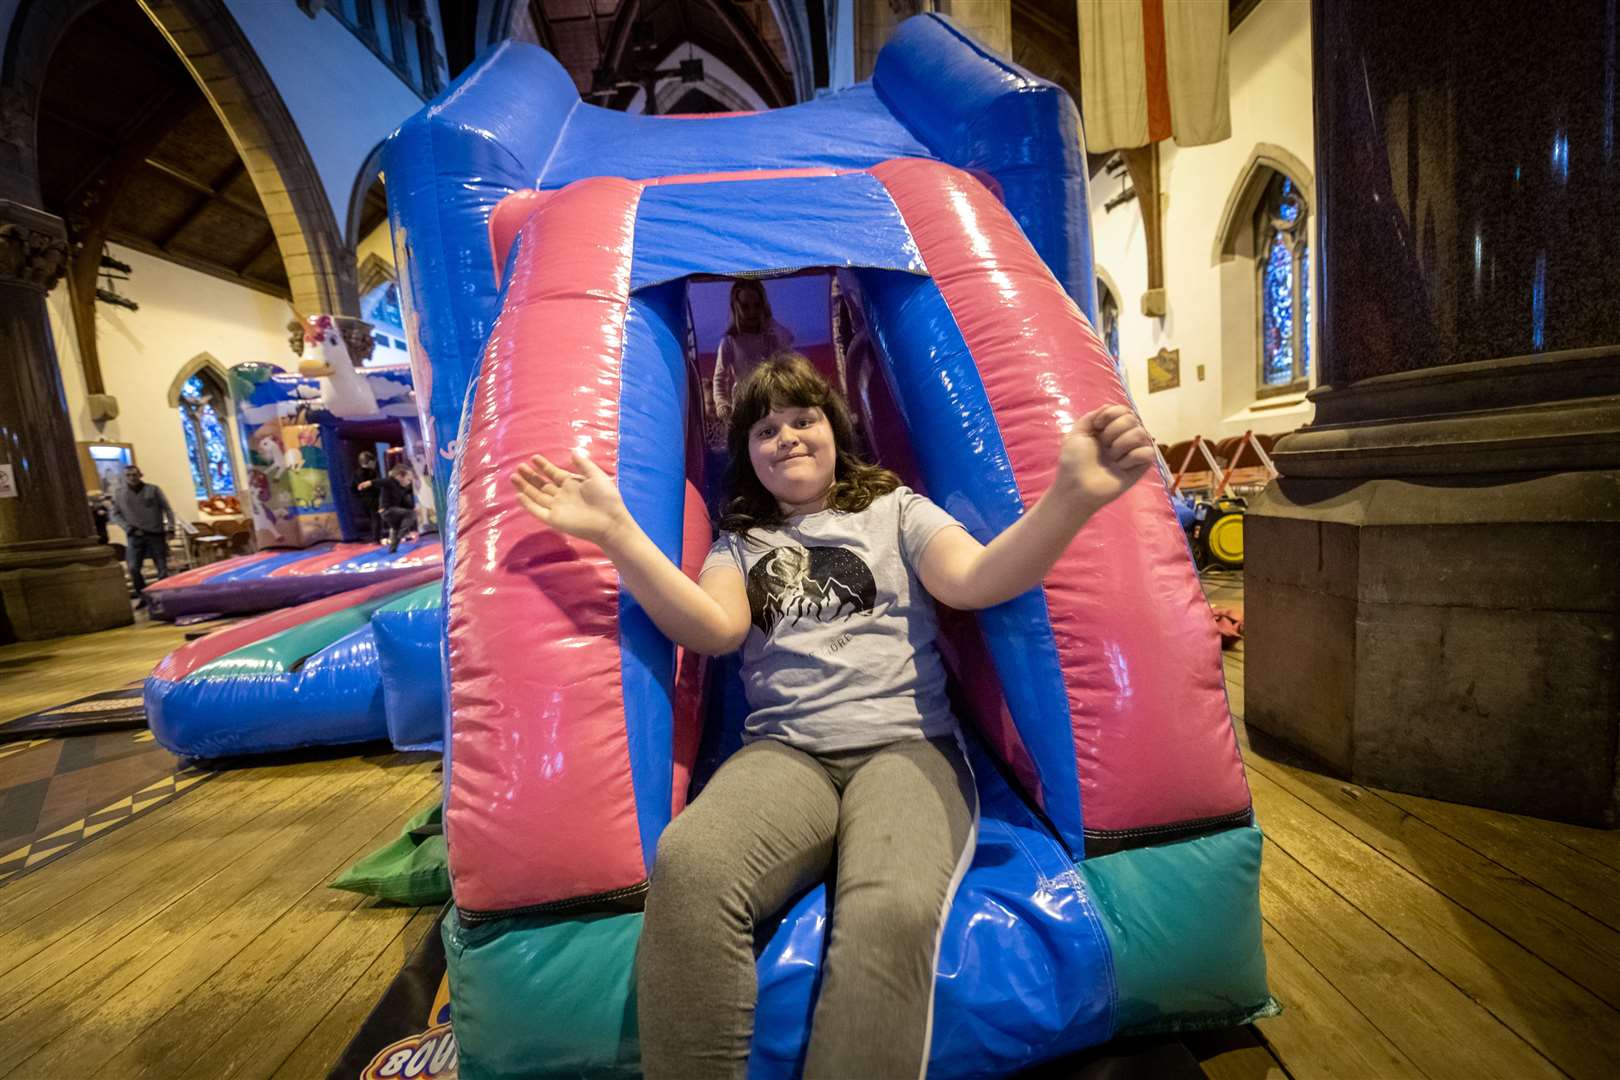 Bouncy castle fun for Sophia Ali.